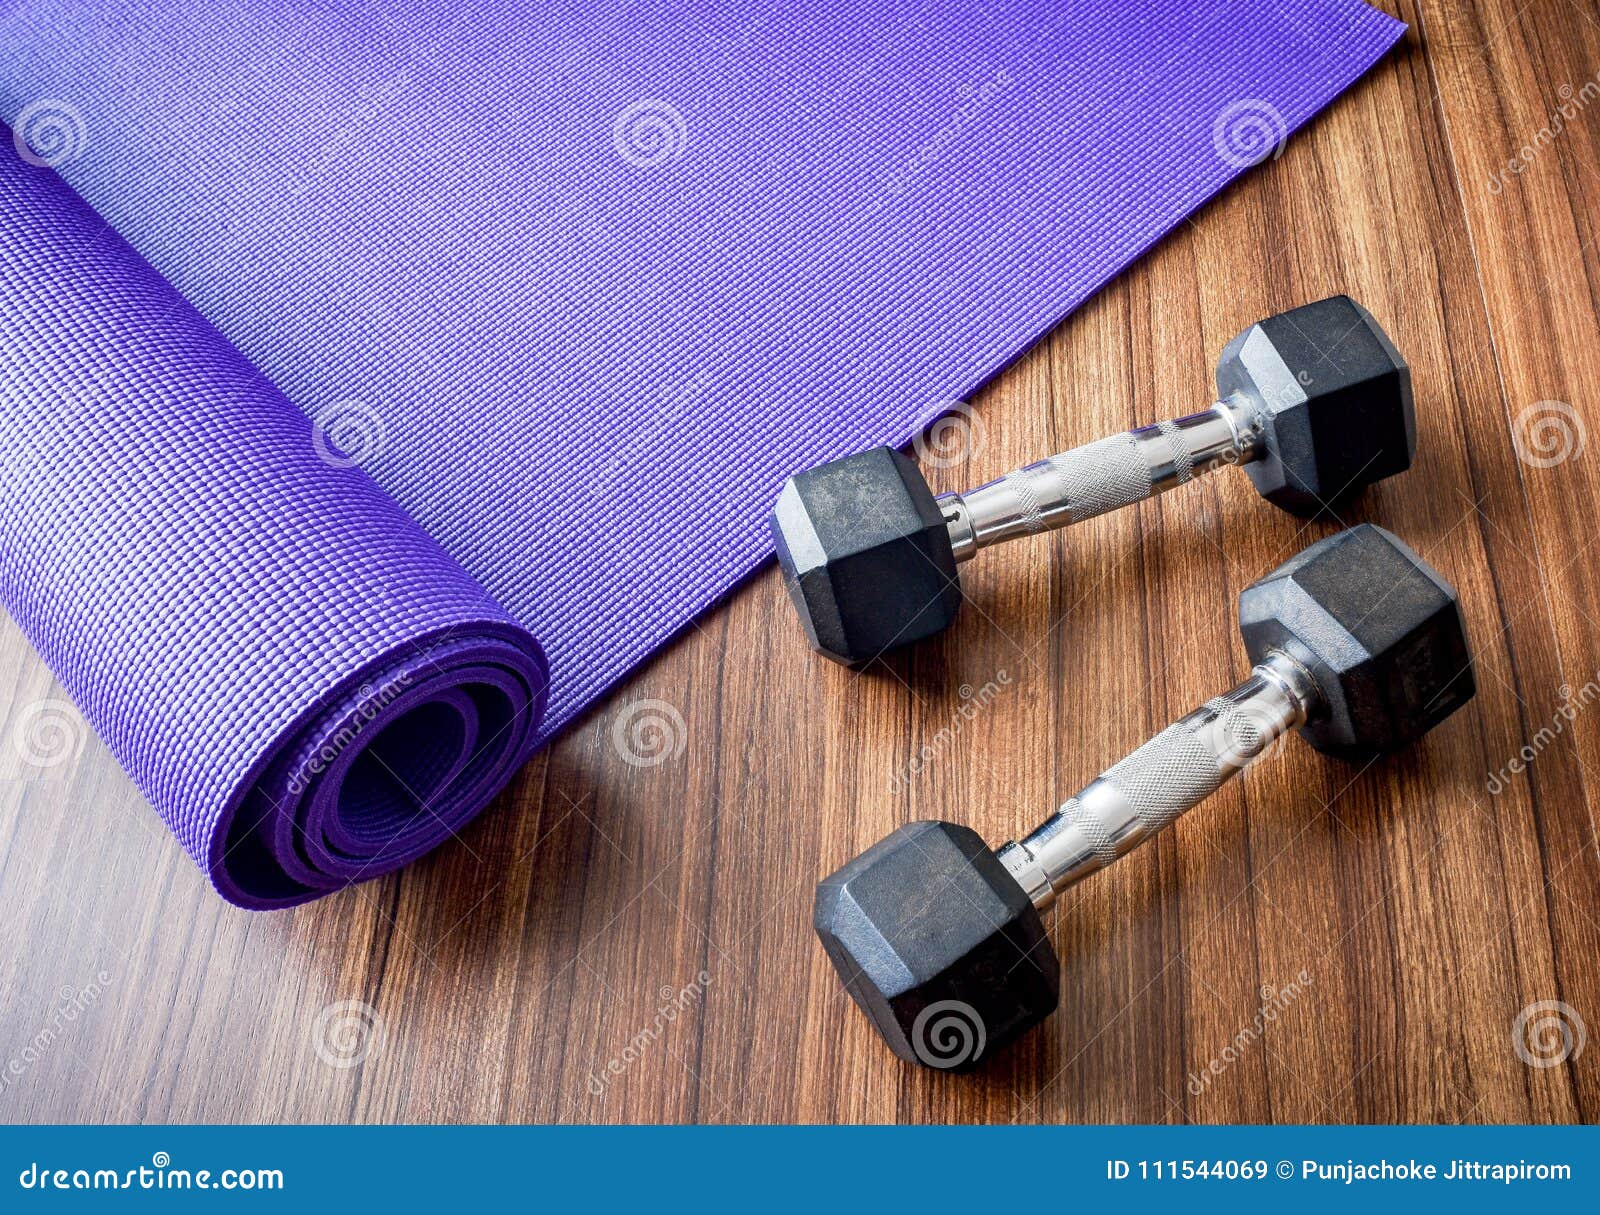 https://thumbs.dreamstime.com/z/dumbells-yoga-mat-workout-gym-equipment-two-dumbbells-wooden-floor-fitness-111544069.jpg